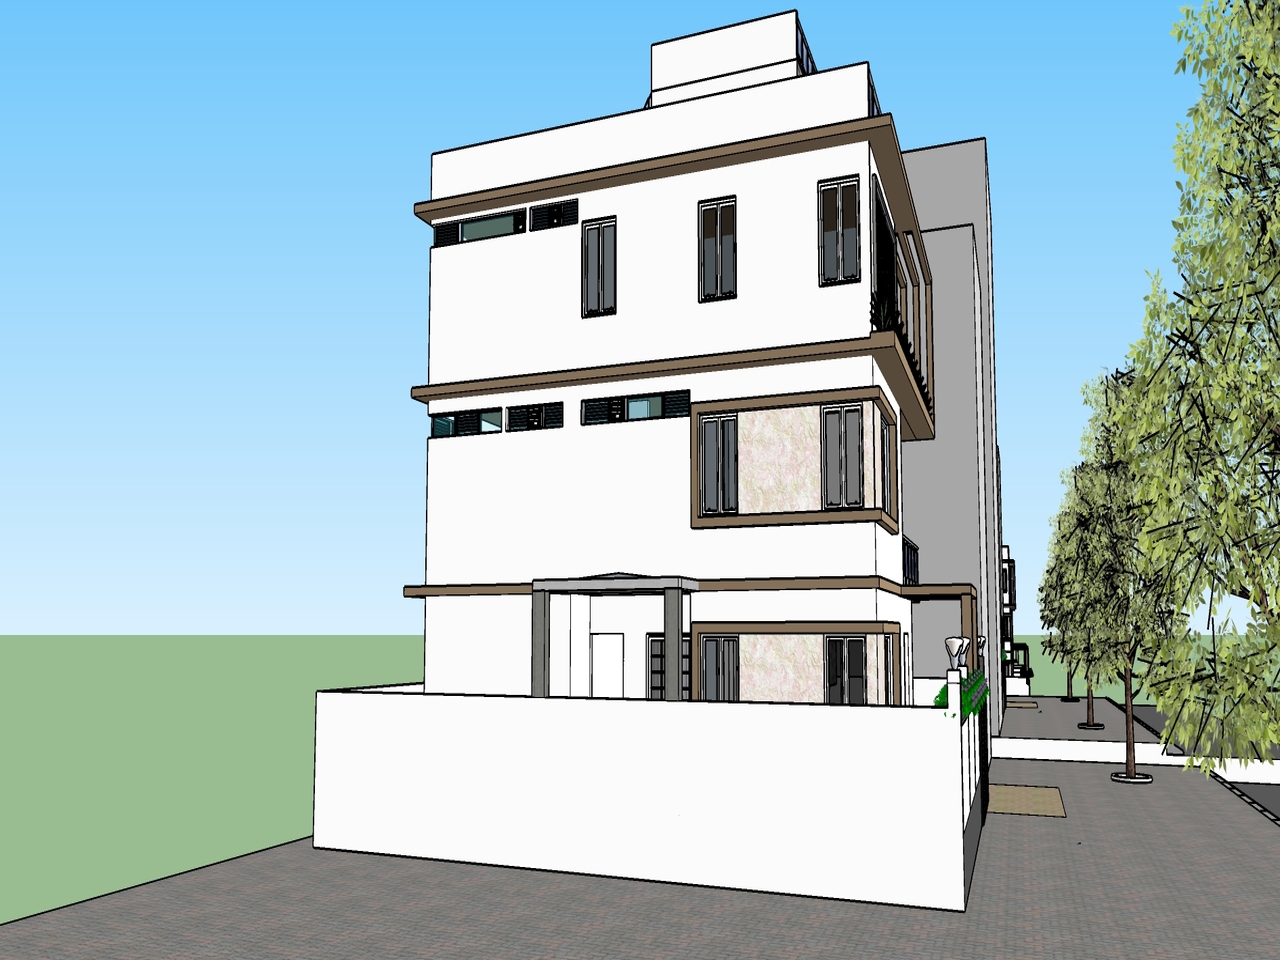 Best Residential Construction Images, Latest Residential Construction photos, Best Residential Construction design,Latest Residential Construction design, AK construction, in, Vadodara, Gujarat